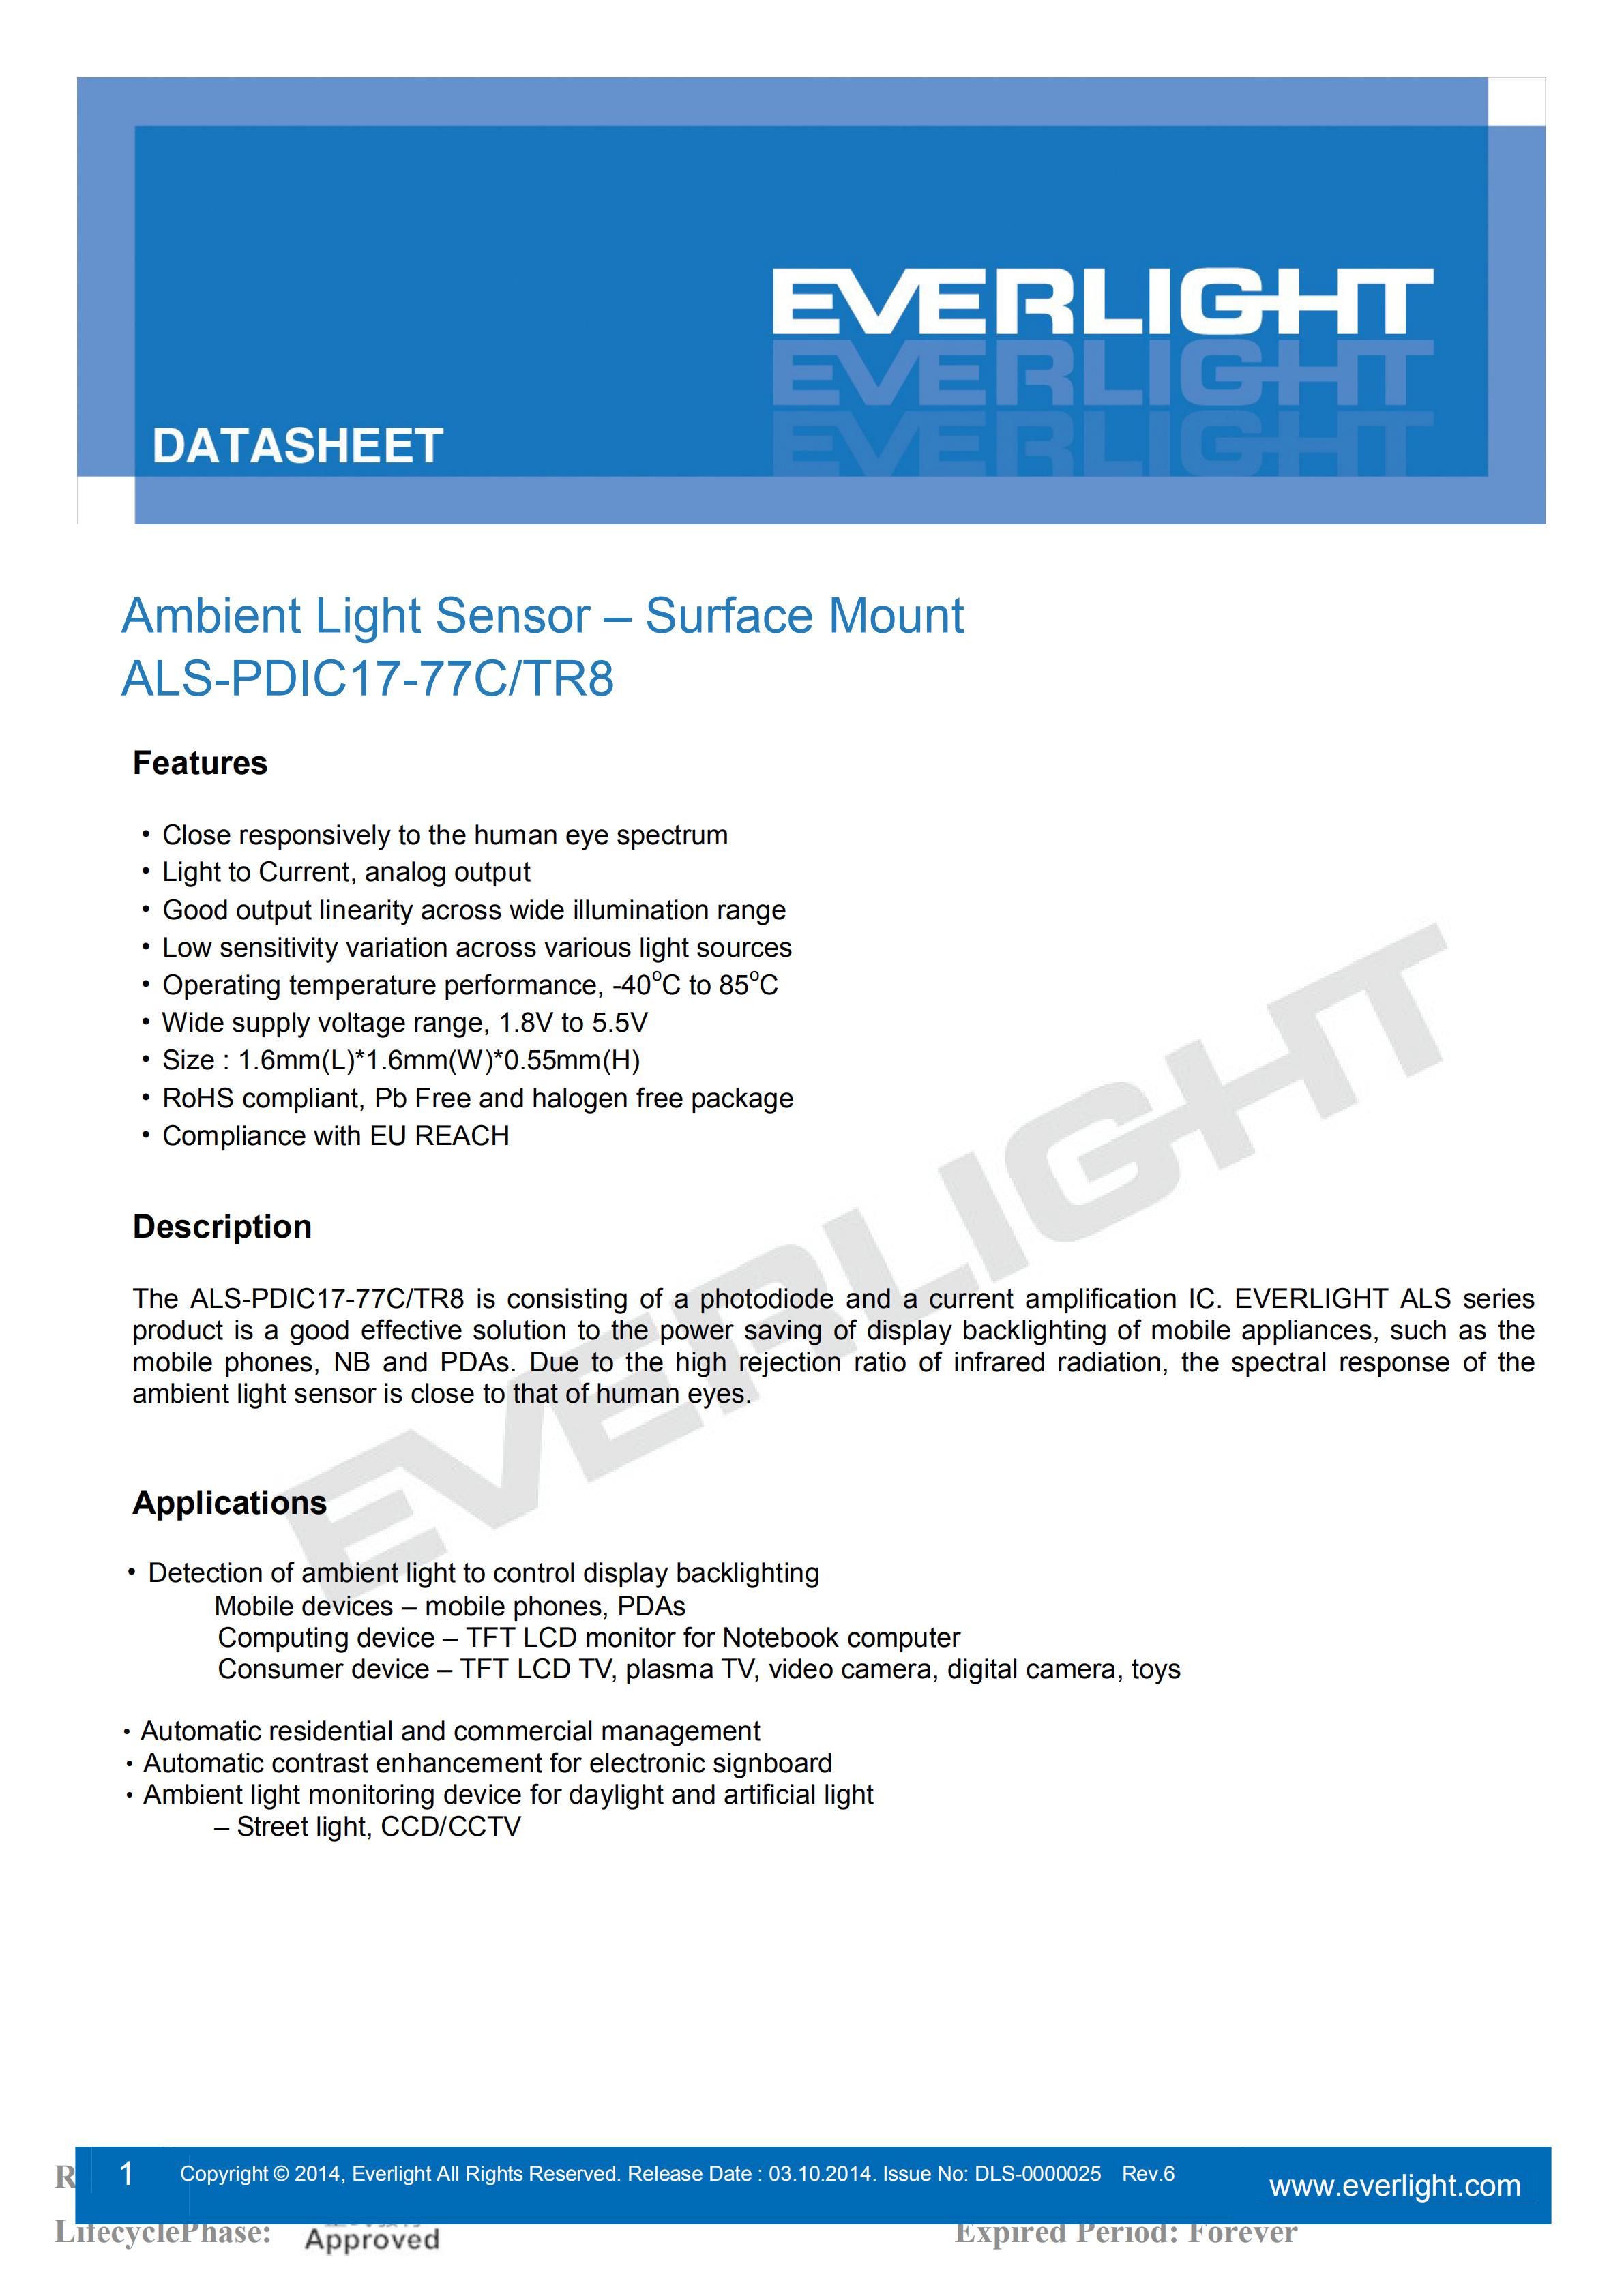 EVERLIGHT SMD 0805 AMBIENT LIGHT SENSOR ALS-PDIC17-77C/TR8 Datasheet